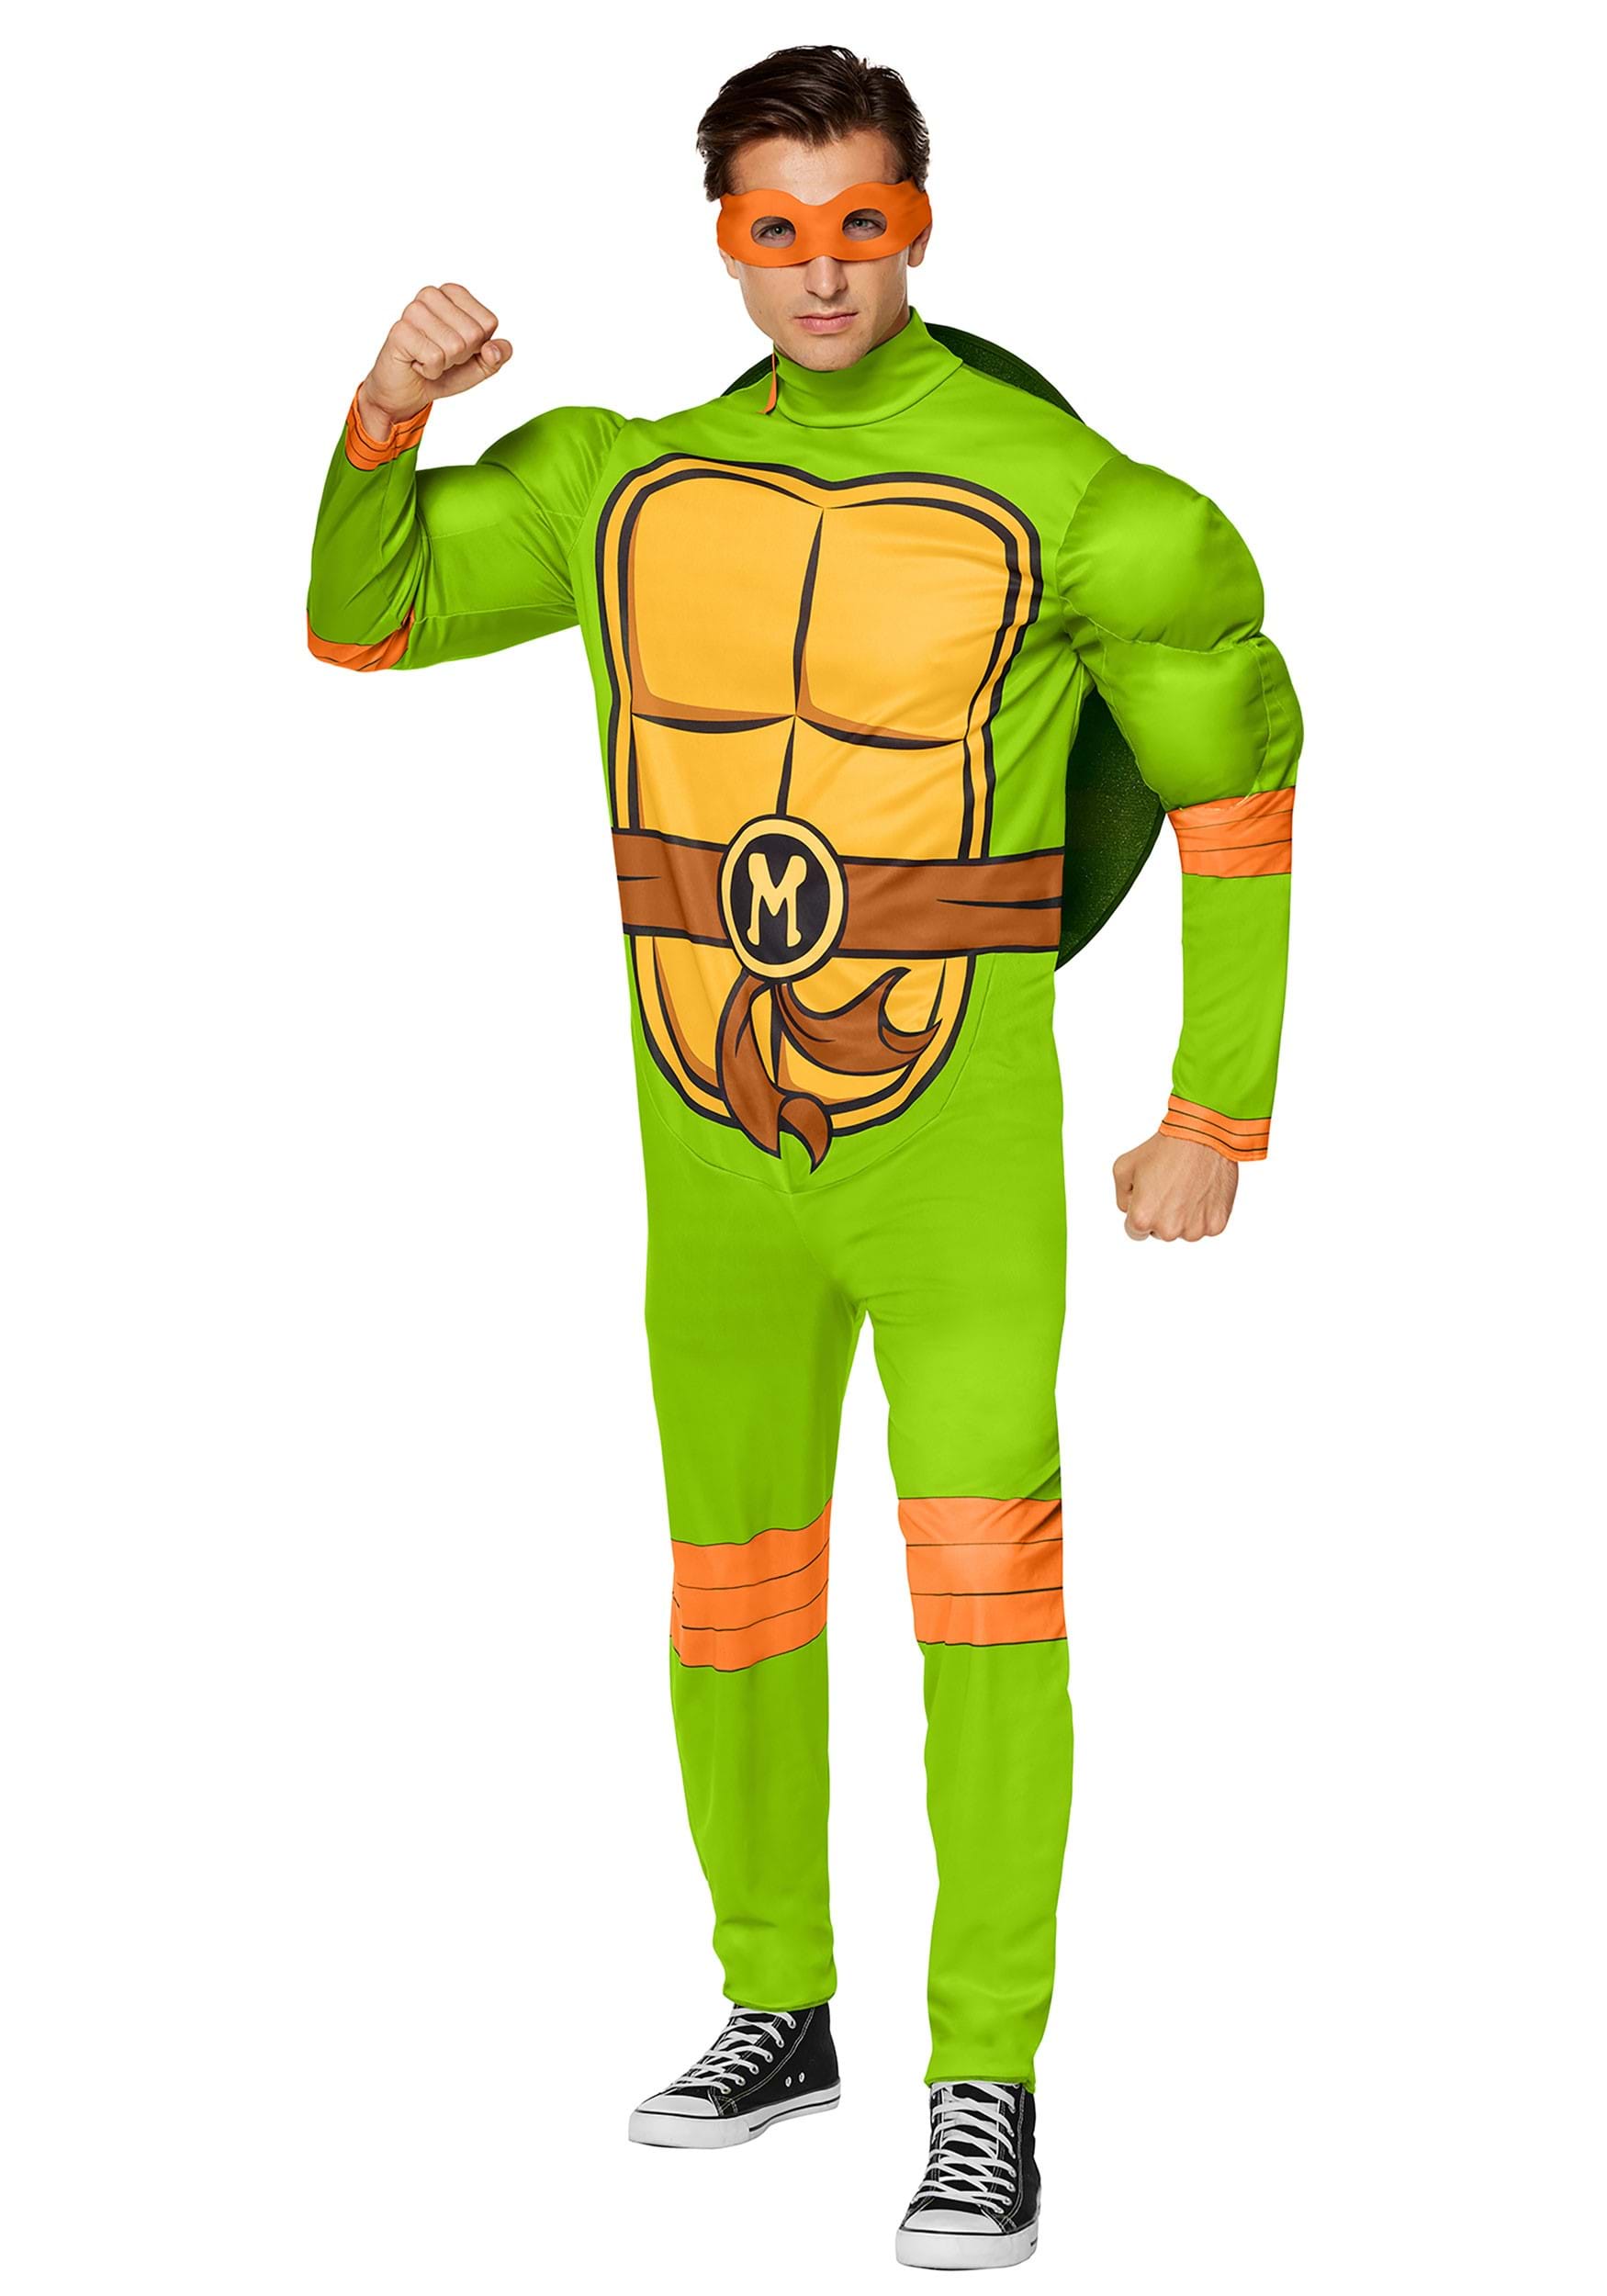 https://images.halloweencostumes.com/products/91816/1-1/teenage-mutant-ninja-turtles-michelangelo-costume.jpg